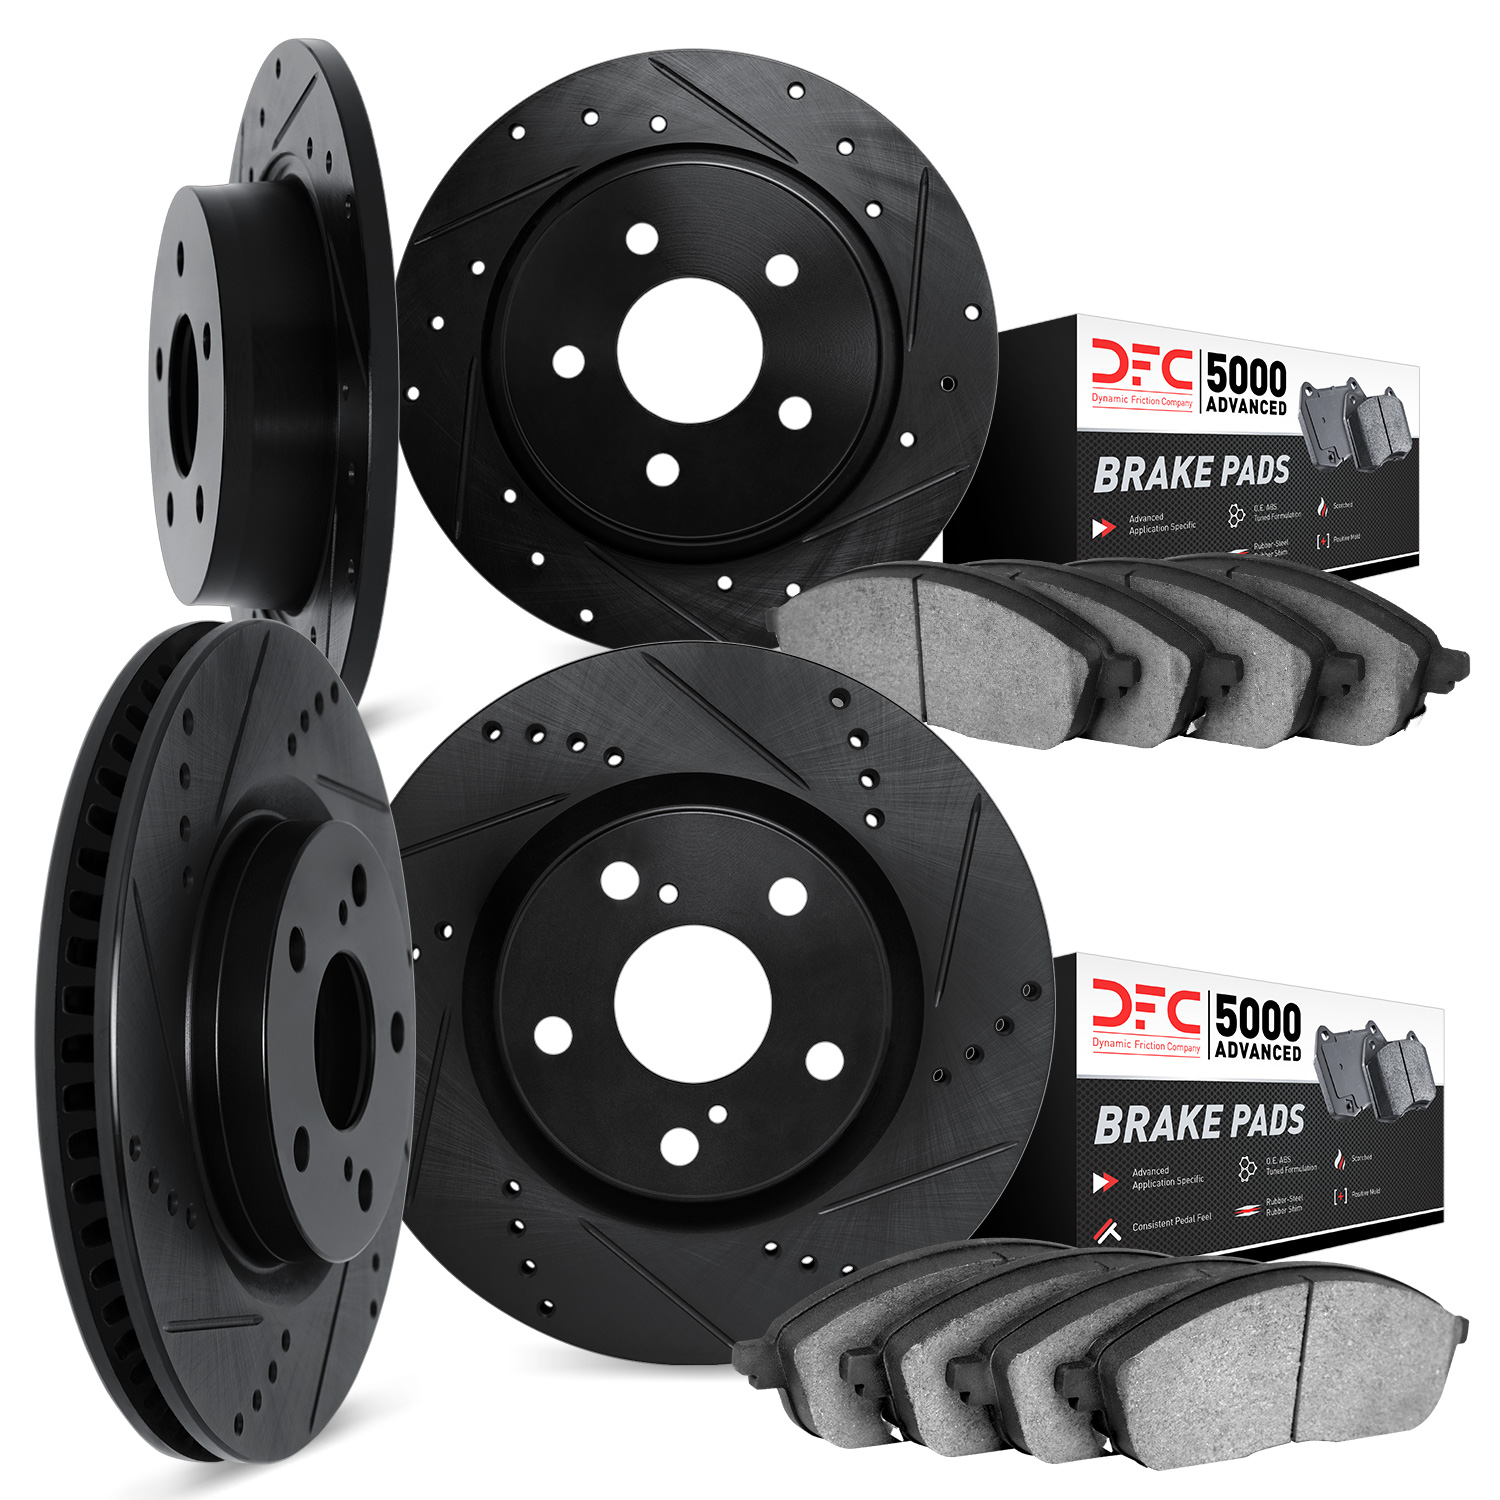 8504-54398 Drilled/Slotted Brake Rotors w/5000 Advanced Brake Pads Kit [Black], 2017-2020 Ford/Lincoln/Mercury/Mazda, Position: